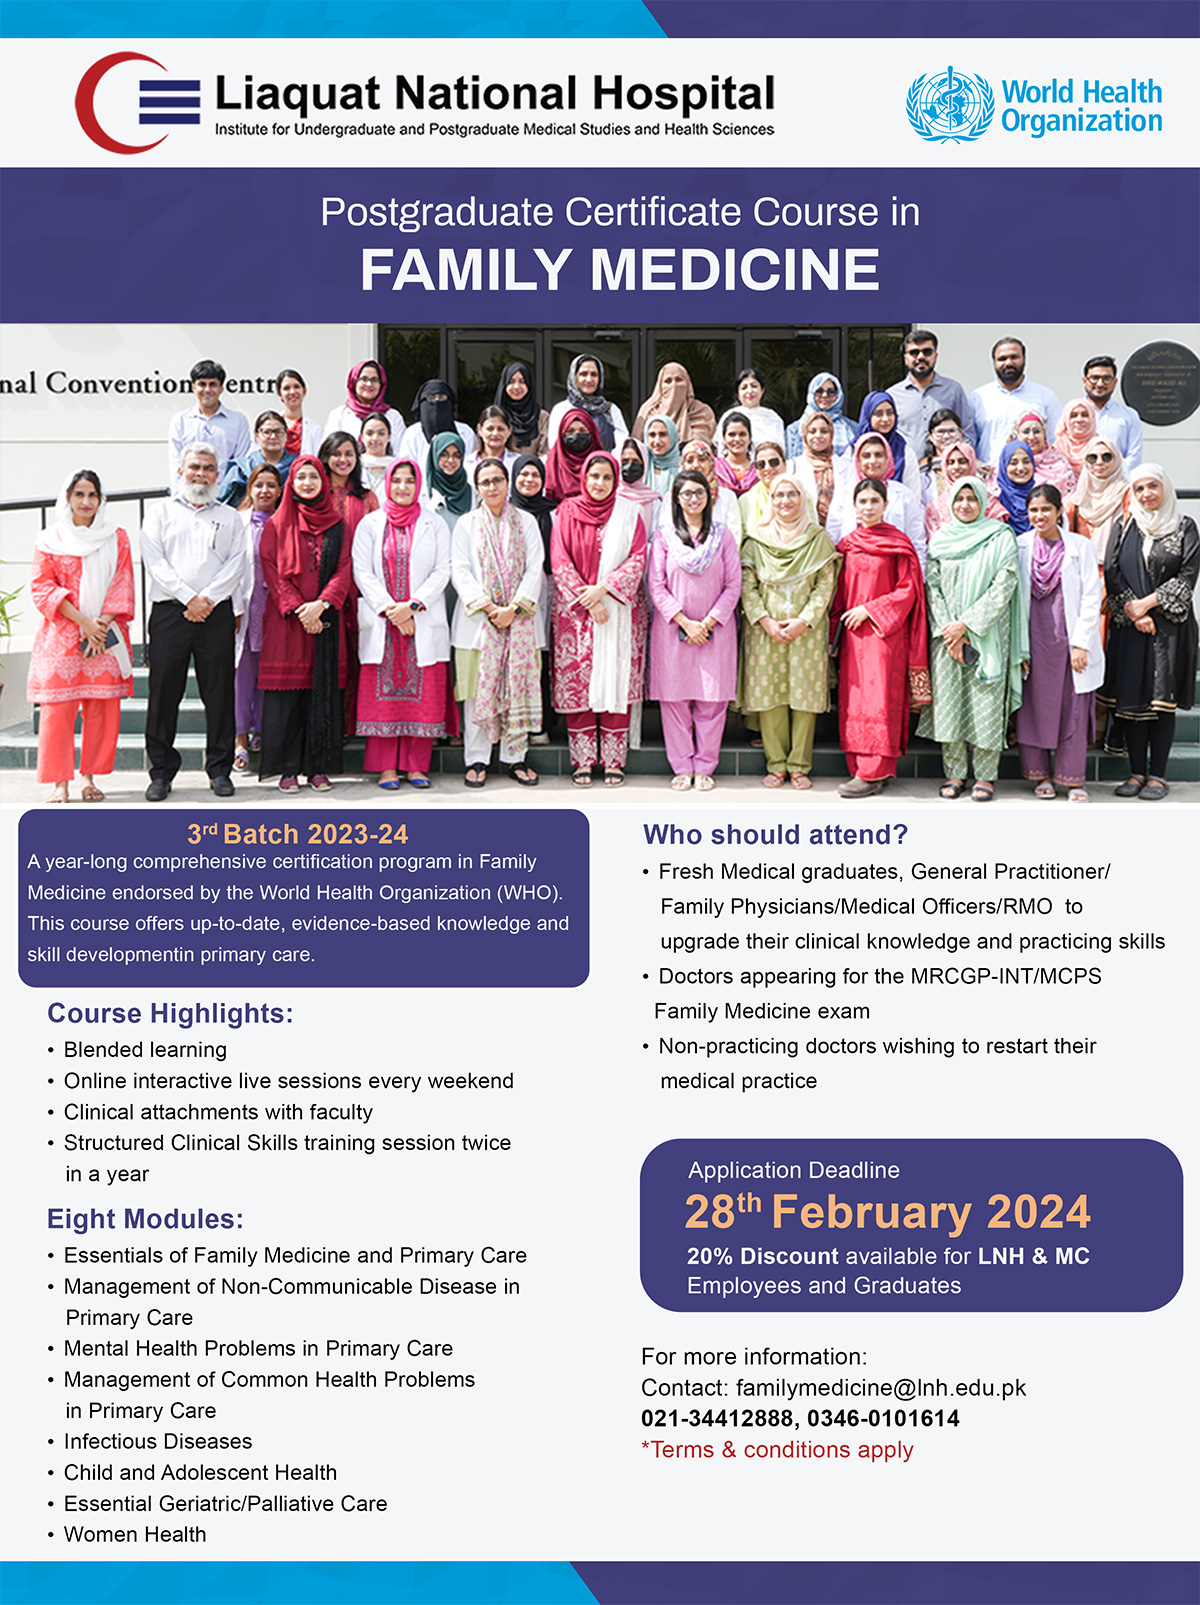 3rd Postgraduate Certificate Course in Family Medicine, Batch 2024-2025